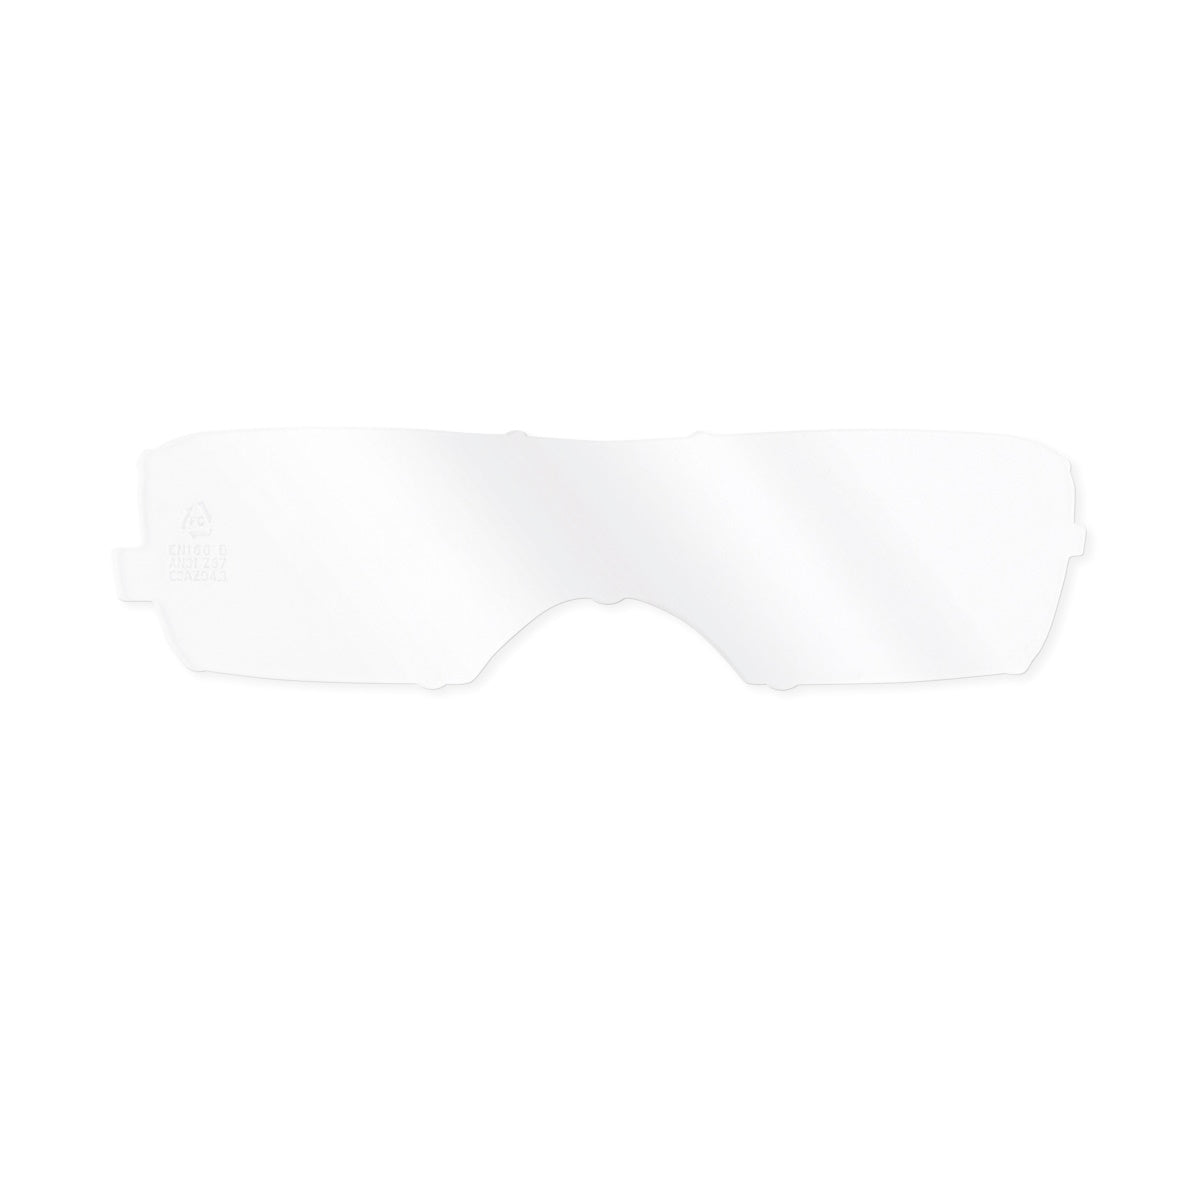 Miller Weld-Mask w/ClearLight Front Cover Lens Pkg/5 (295918)